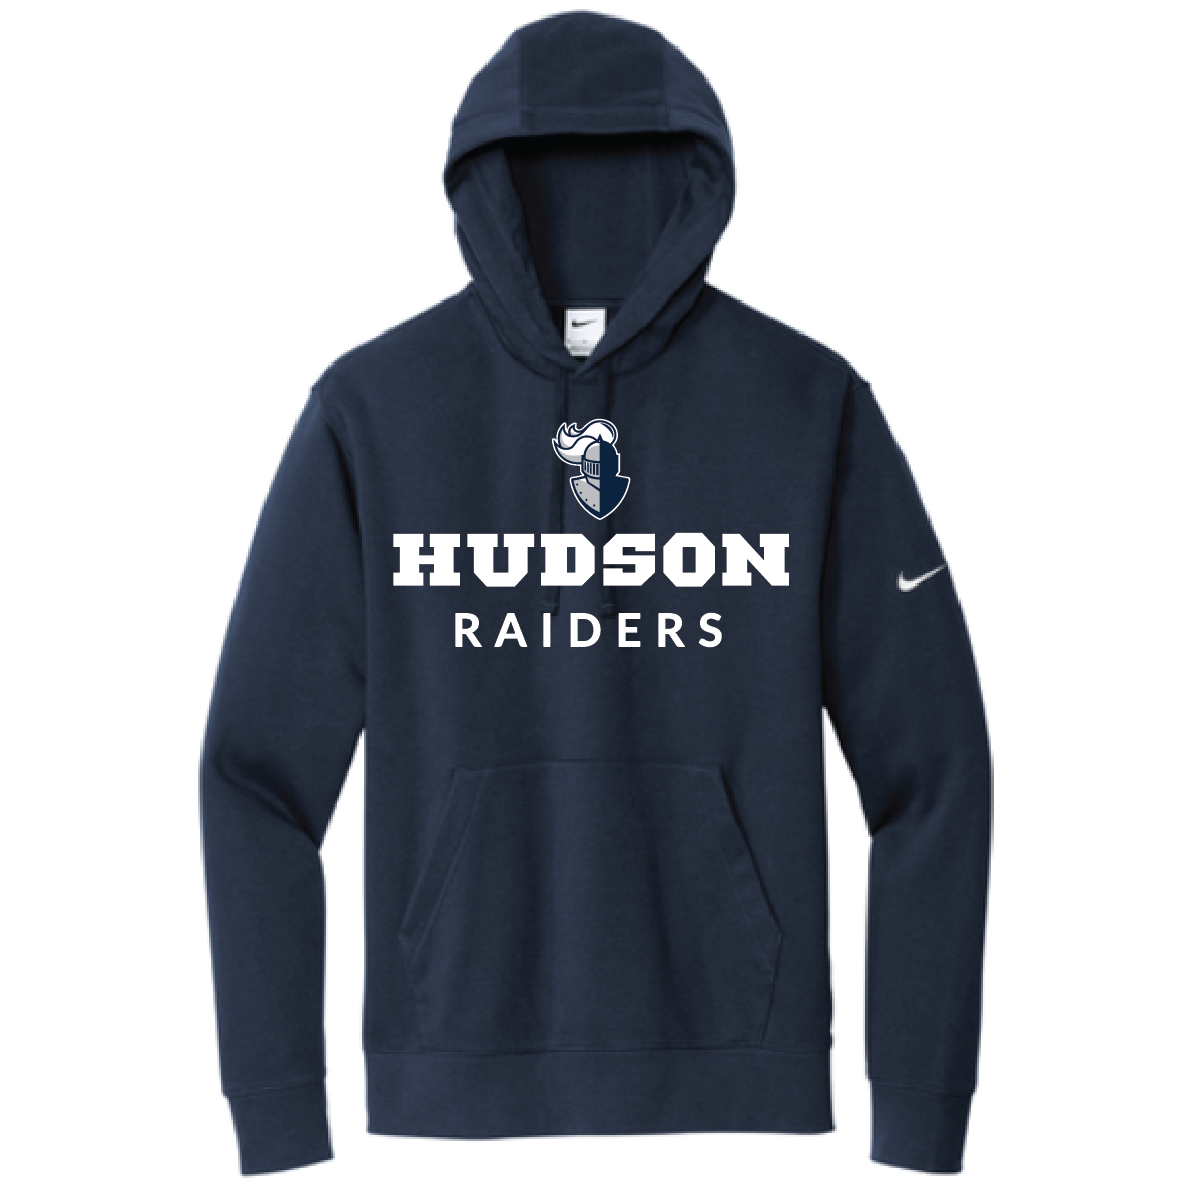 Hudson Raiders Nike Club Fleece Hoodie